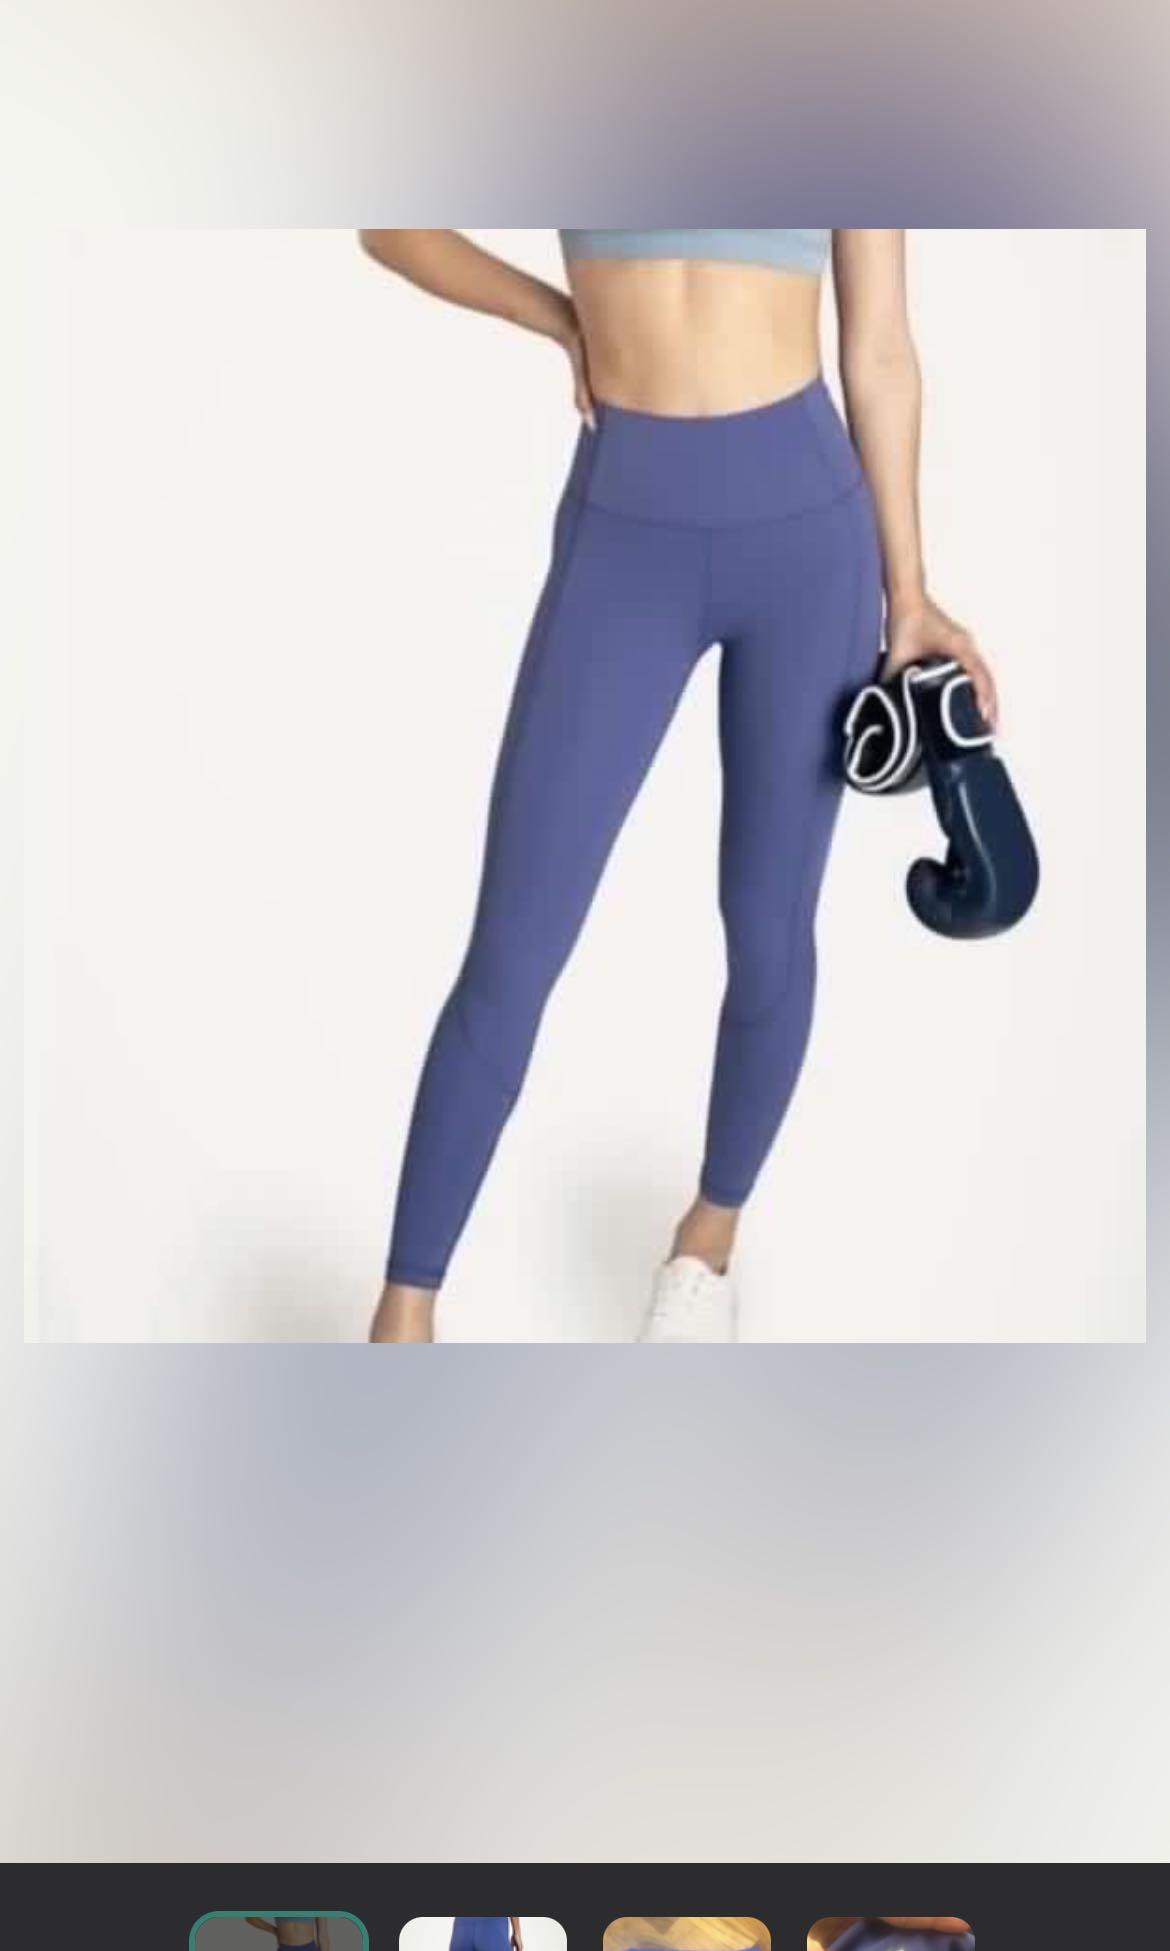 Kydra Impact Leggings in Blue, Women's Fashion, Activewear on